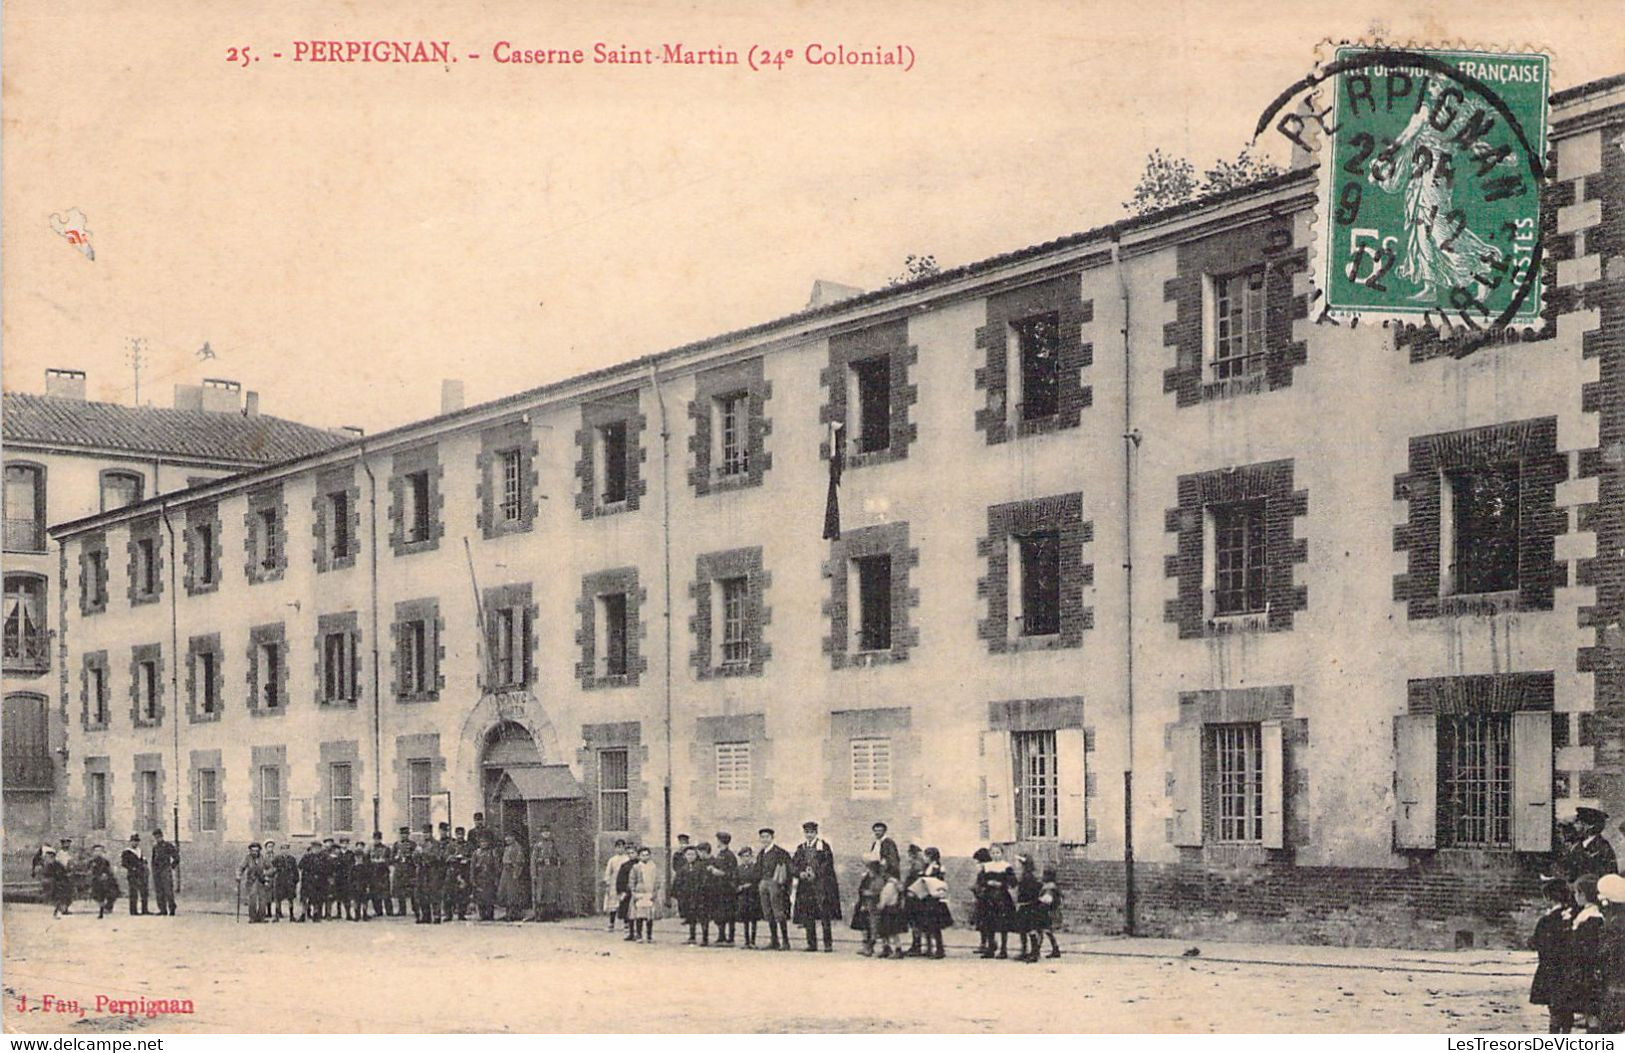 MILITARIA - PERPIGNAN - Caserne Saint Martin - 24è Colonial - J Fau Perpignan - Carte Postale Ancienne - Barracks